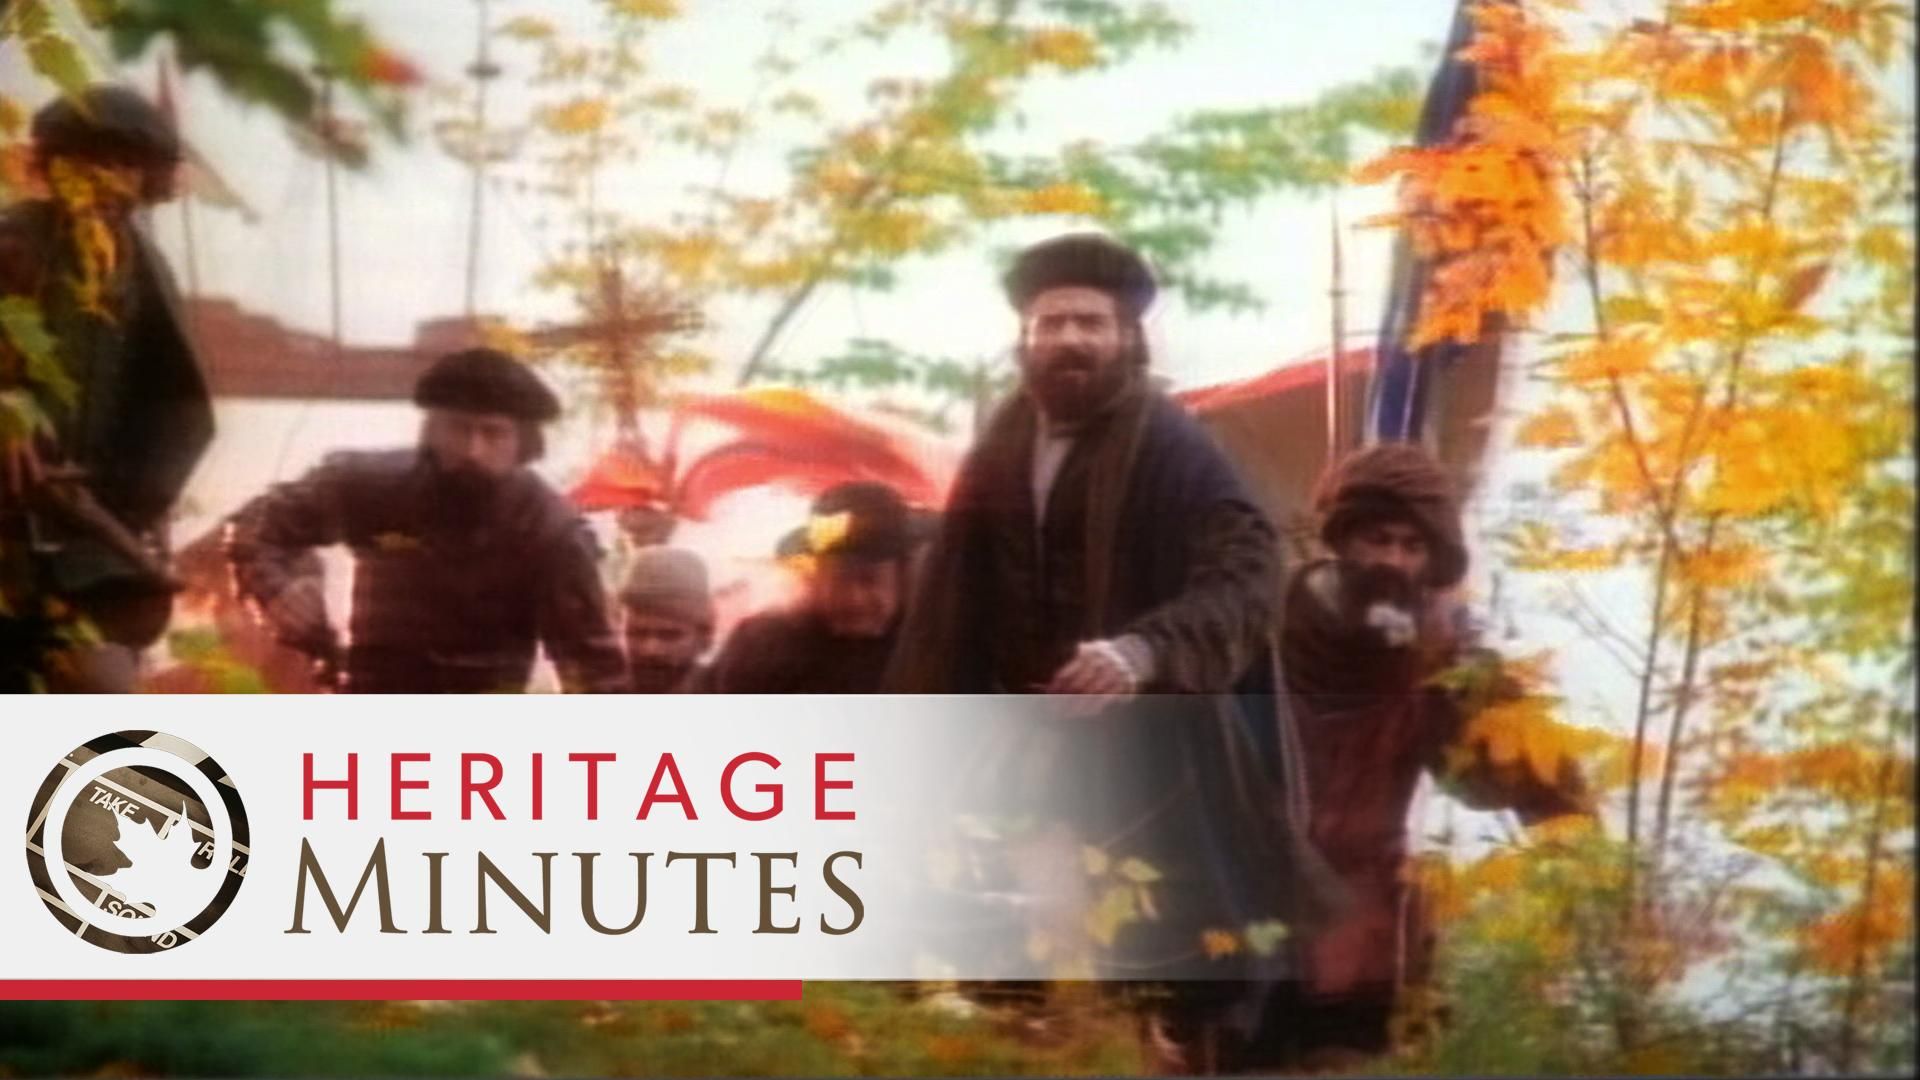 Heritage Minutes background